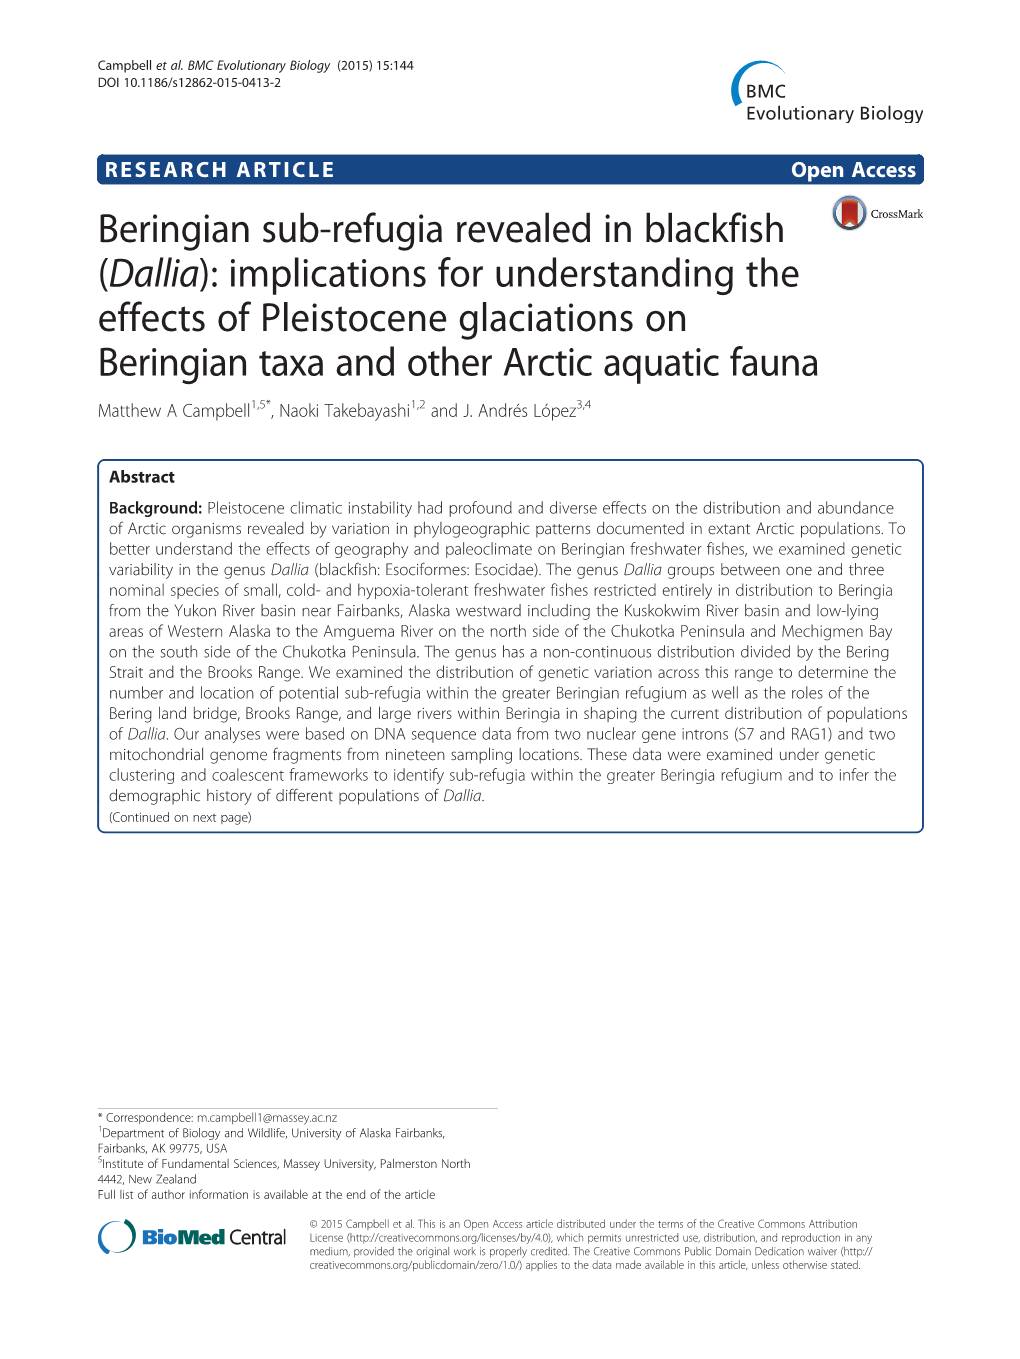 Beringian Sub-Refugia Revealed in Blackfish (Dallia): Implications For